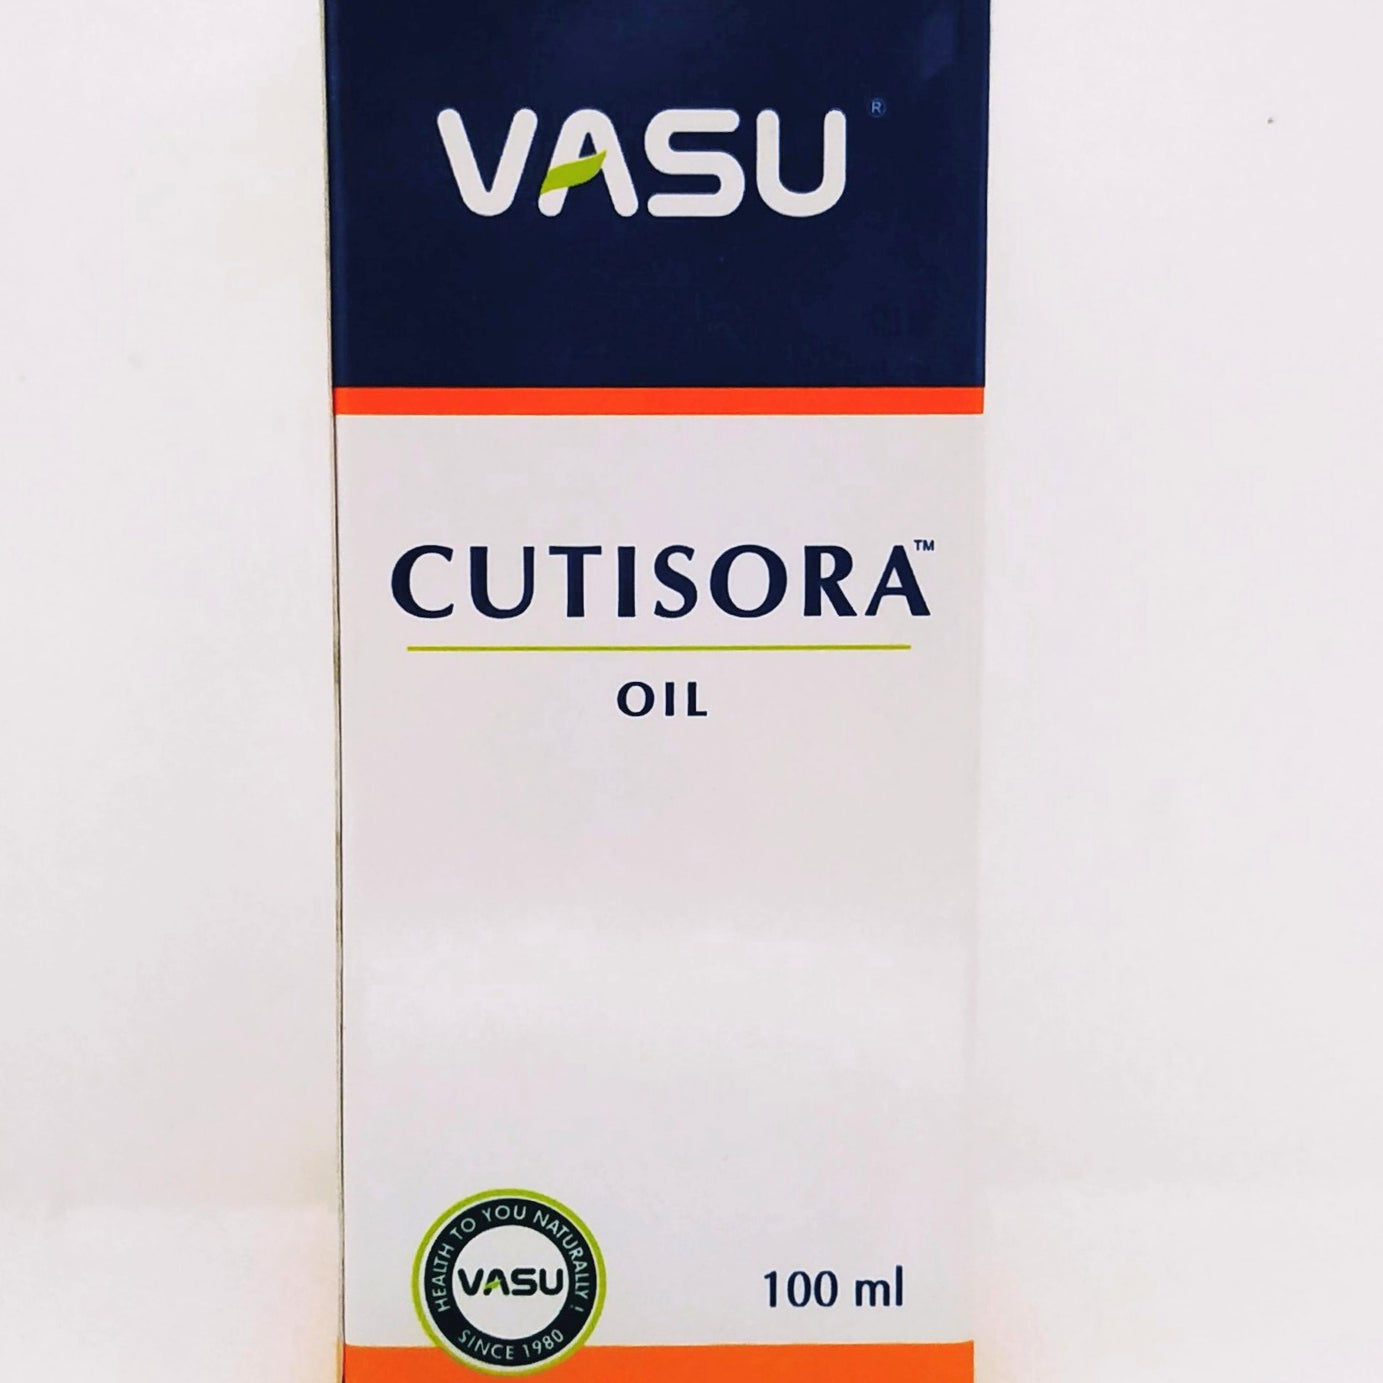 Shop Vasu Cutisora Oil 100ml at price 160.00 from Vasu herbals Online - Ayush Care